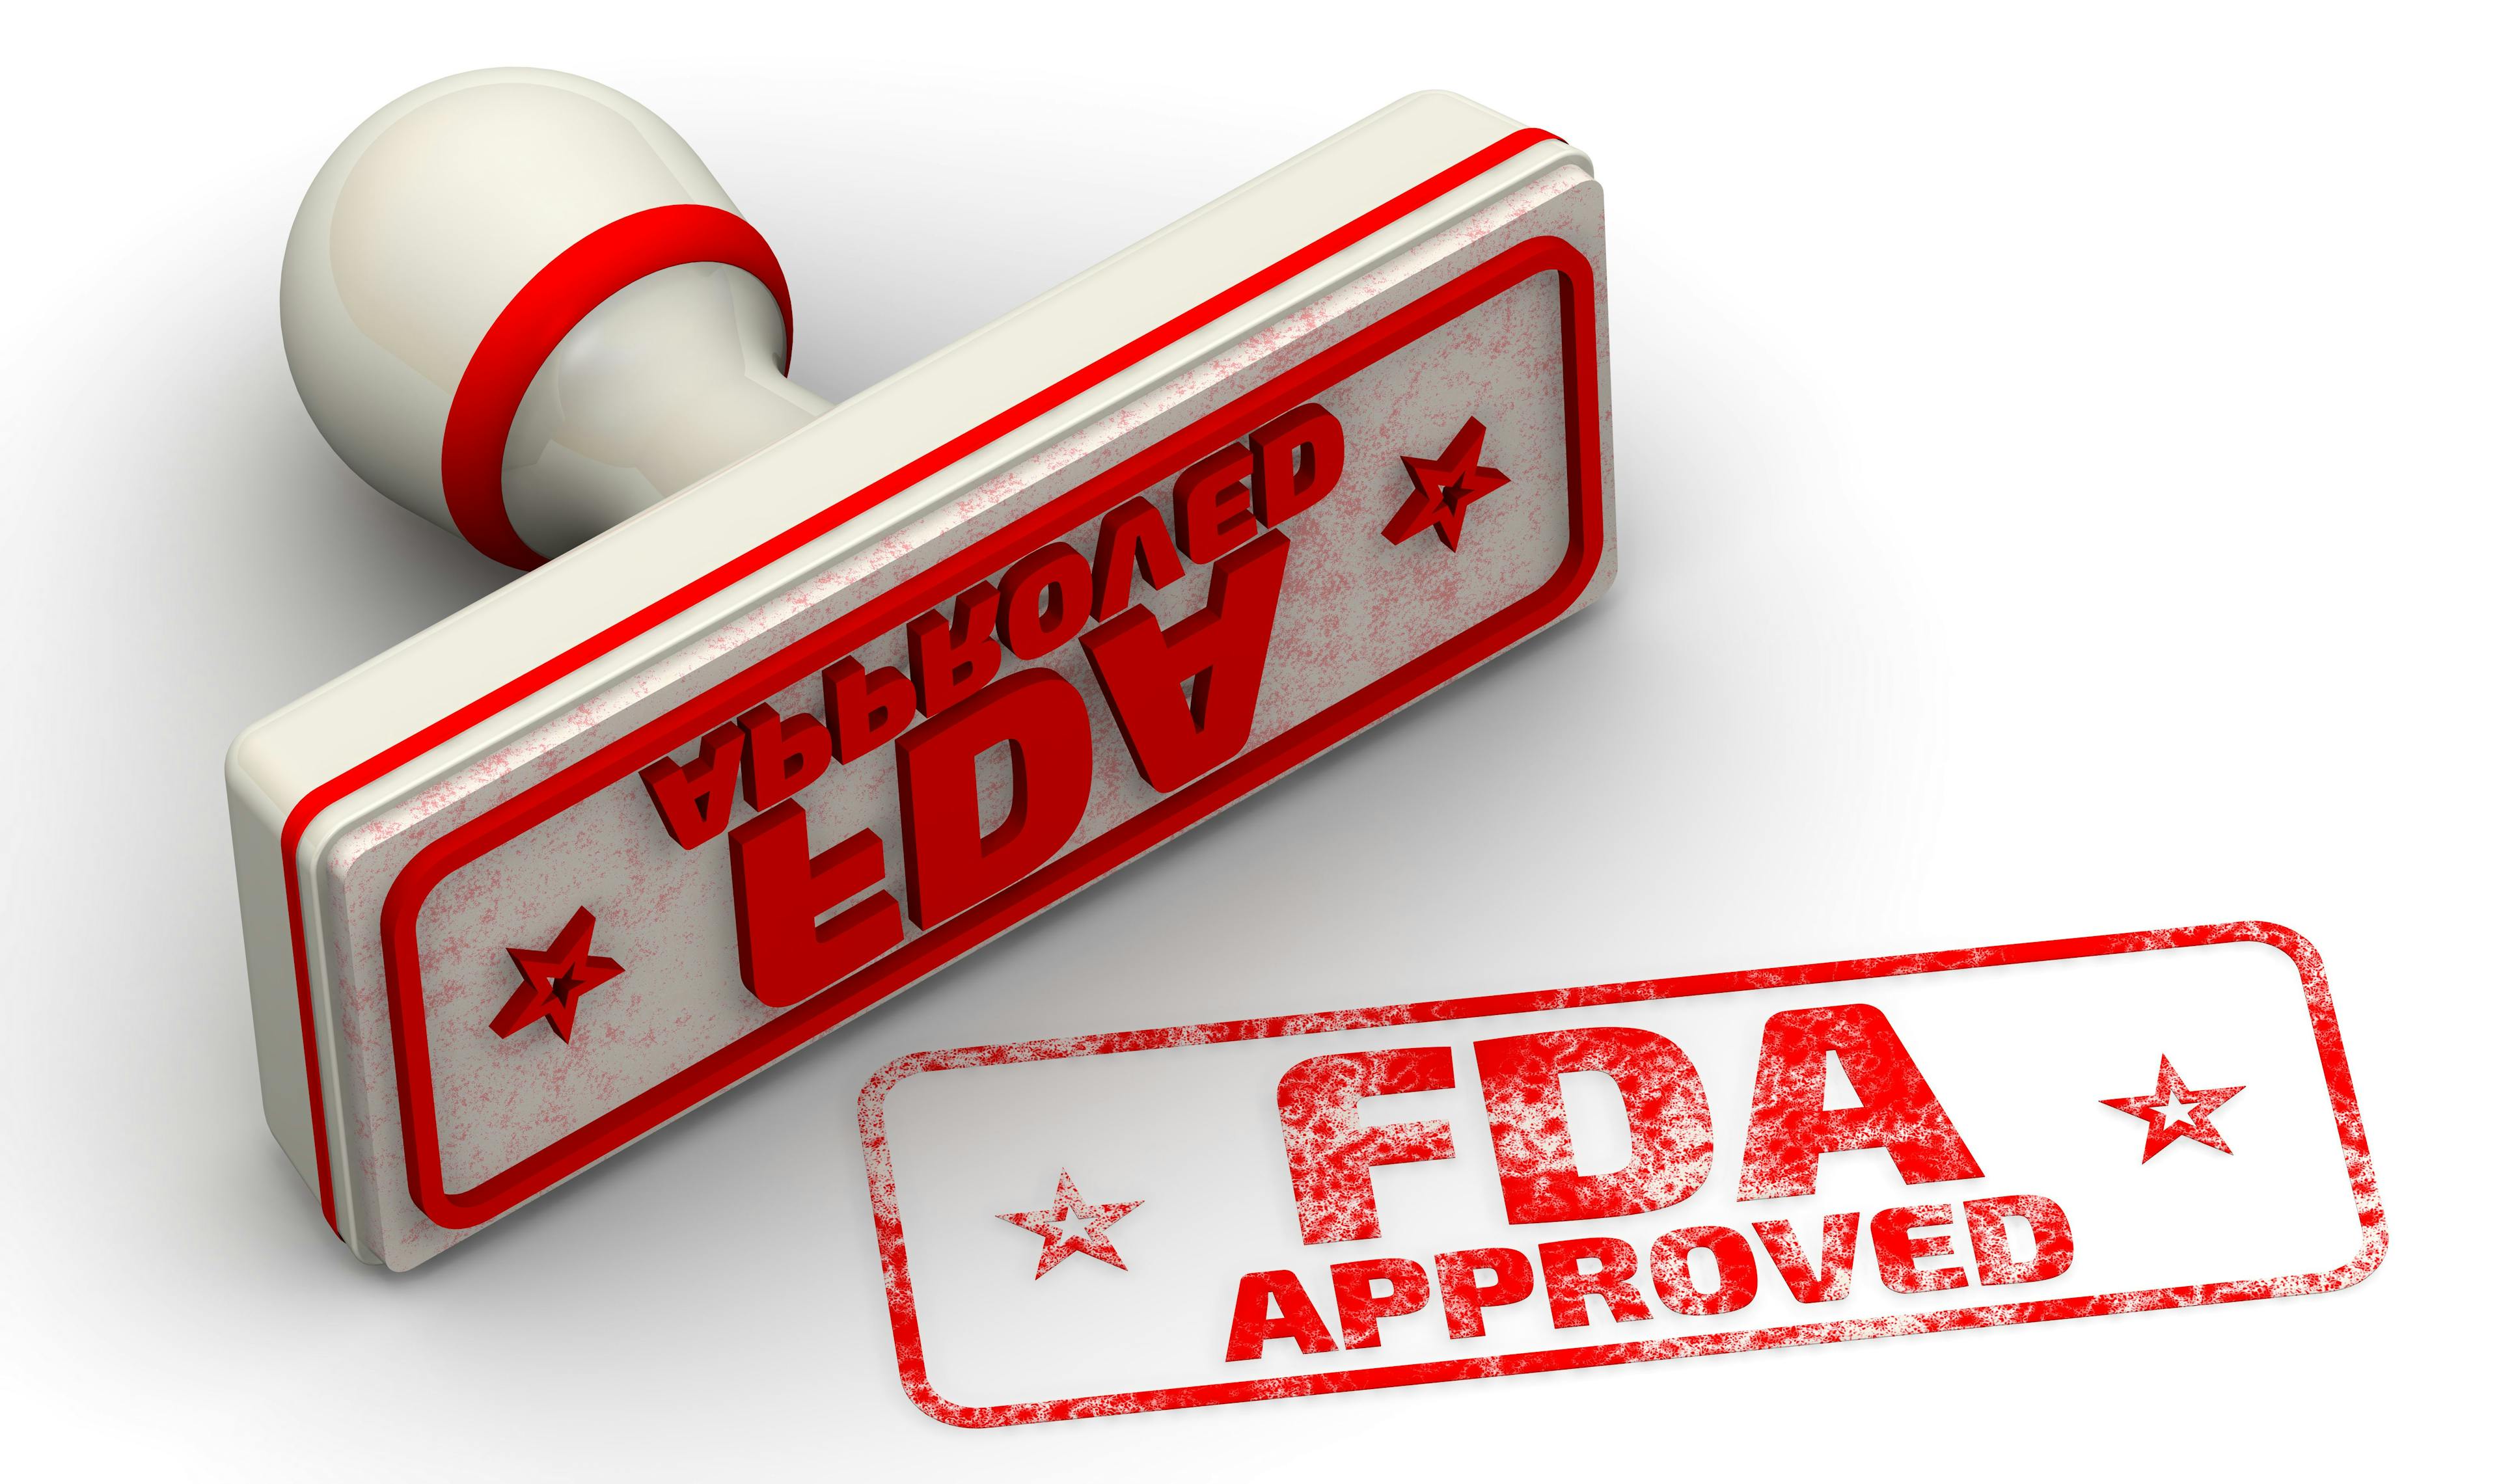 FDA approval stamp / waldemarus - stock.adobe.com